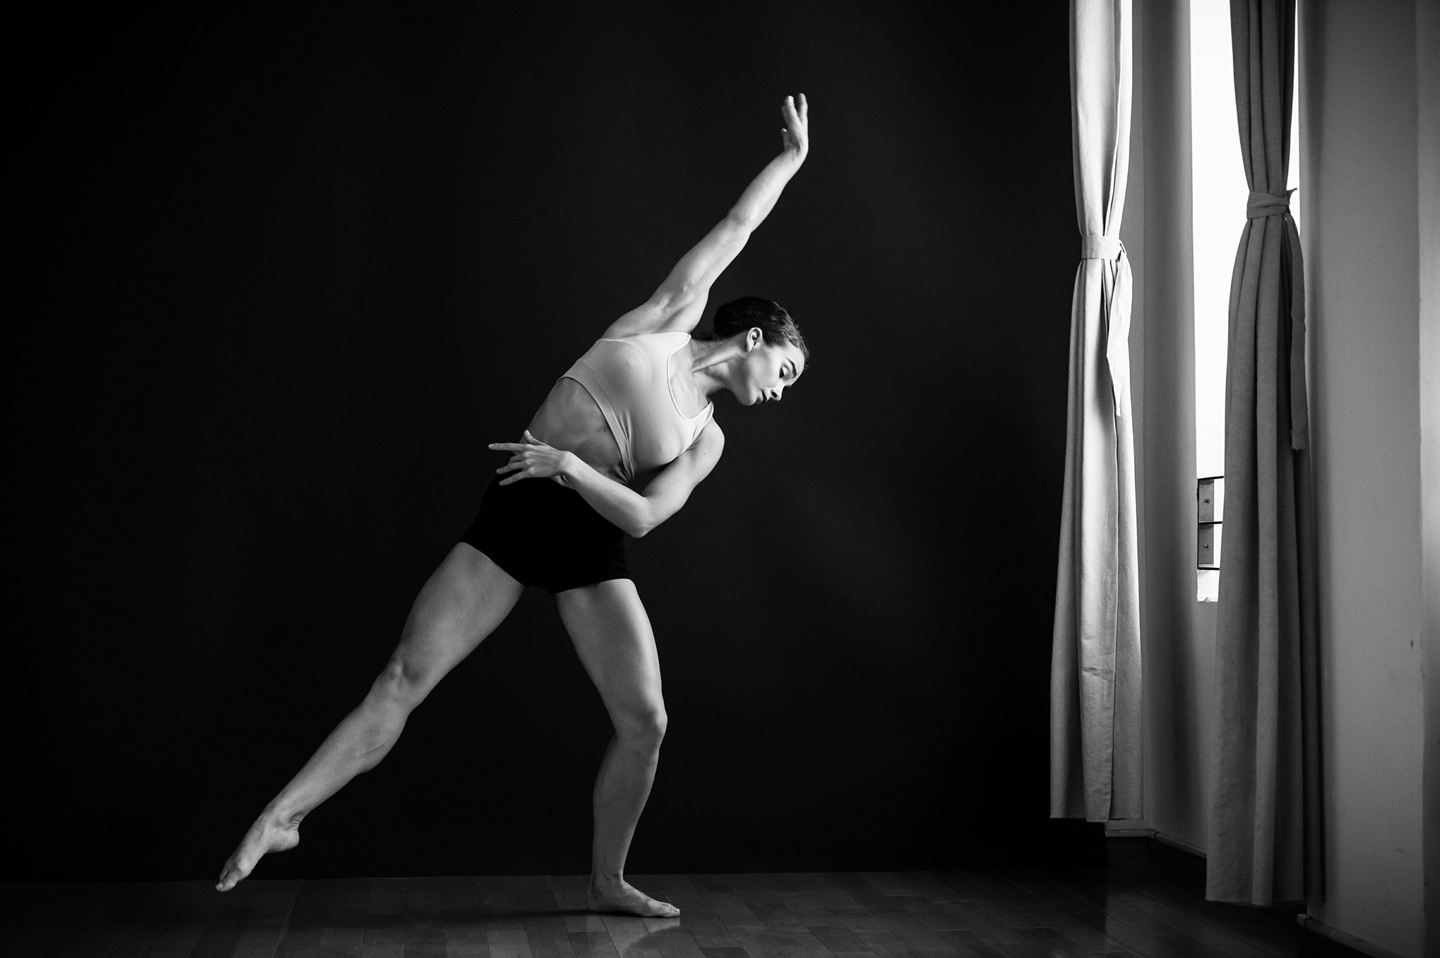 Los Angeles Dance Portrait Photo - Olga Sokolova - by Tommy Xing Photography 01.JPG